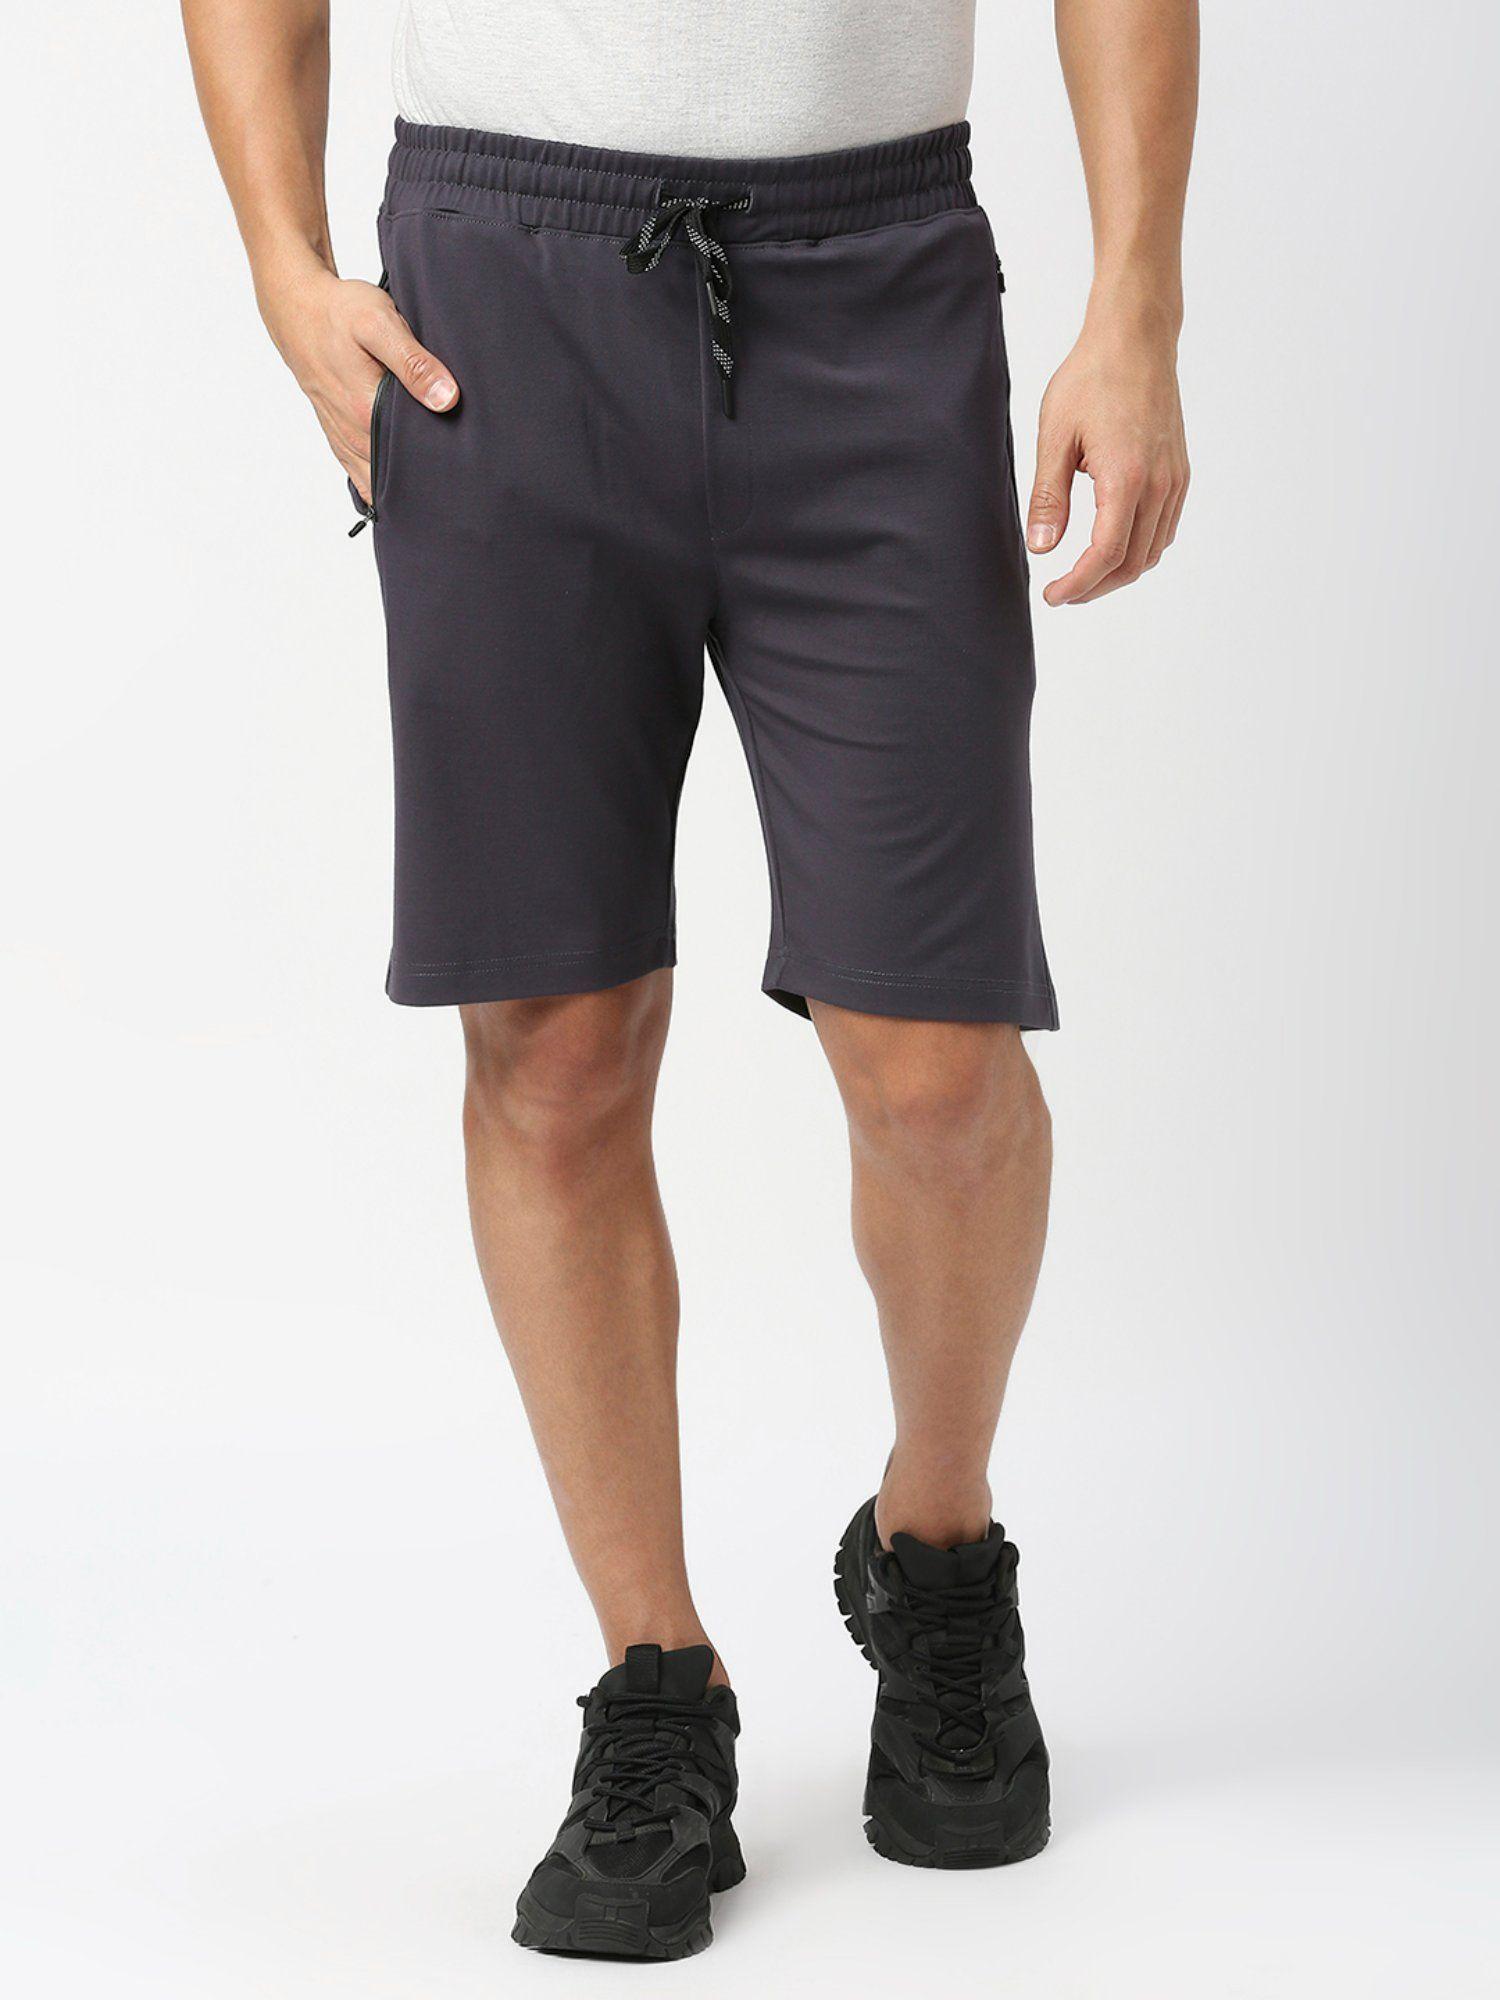 charcoal grey tencel lycra shorts with zipped pocket